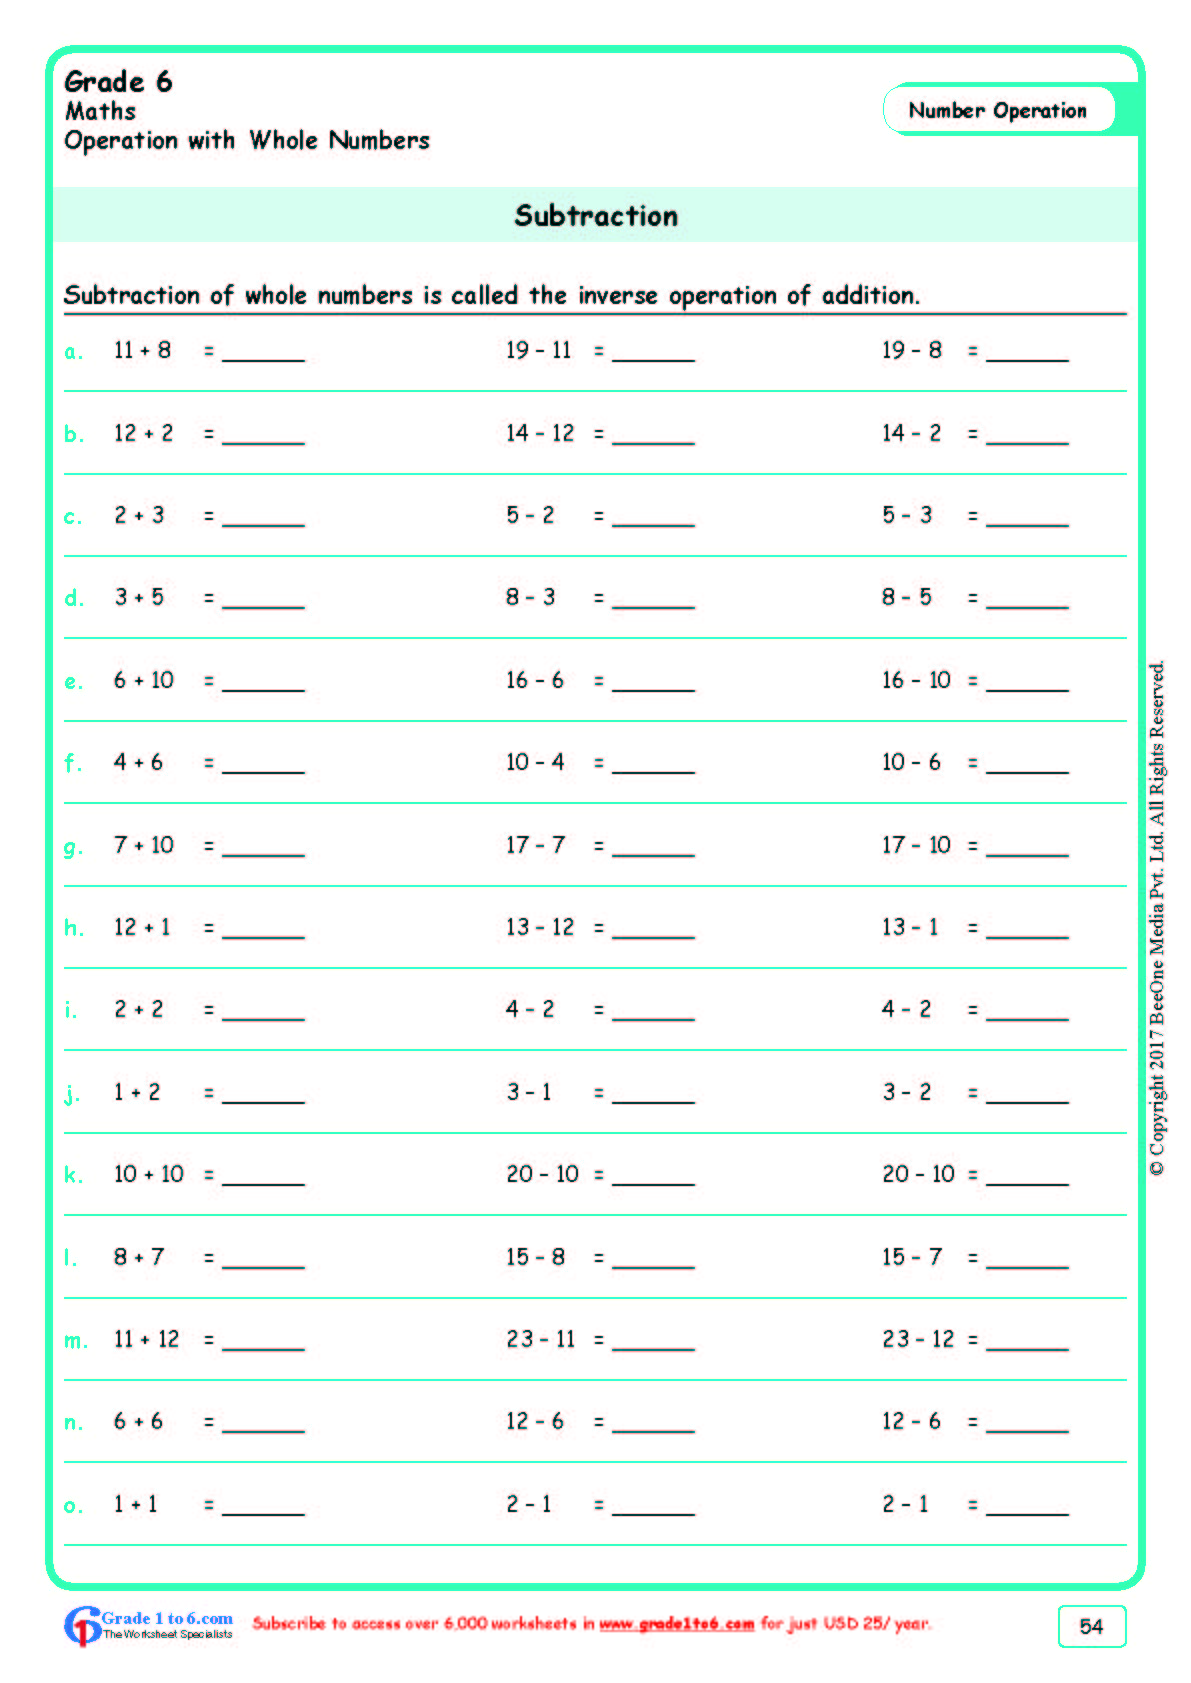 grade-6-subtraction-worksheets-www-grade1to6